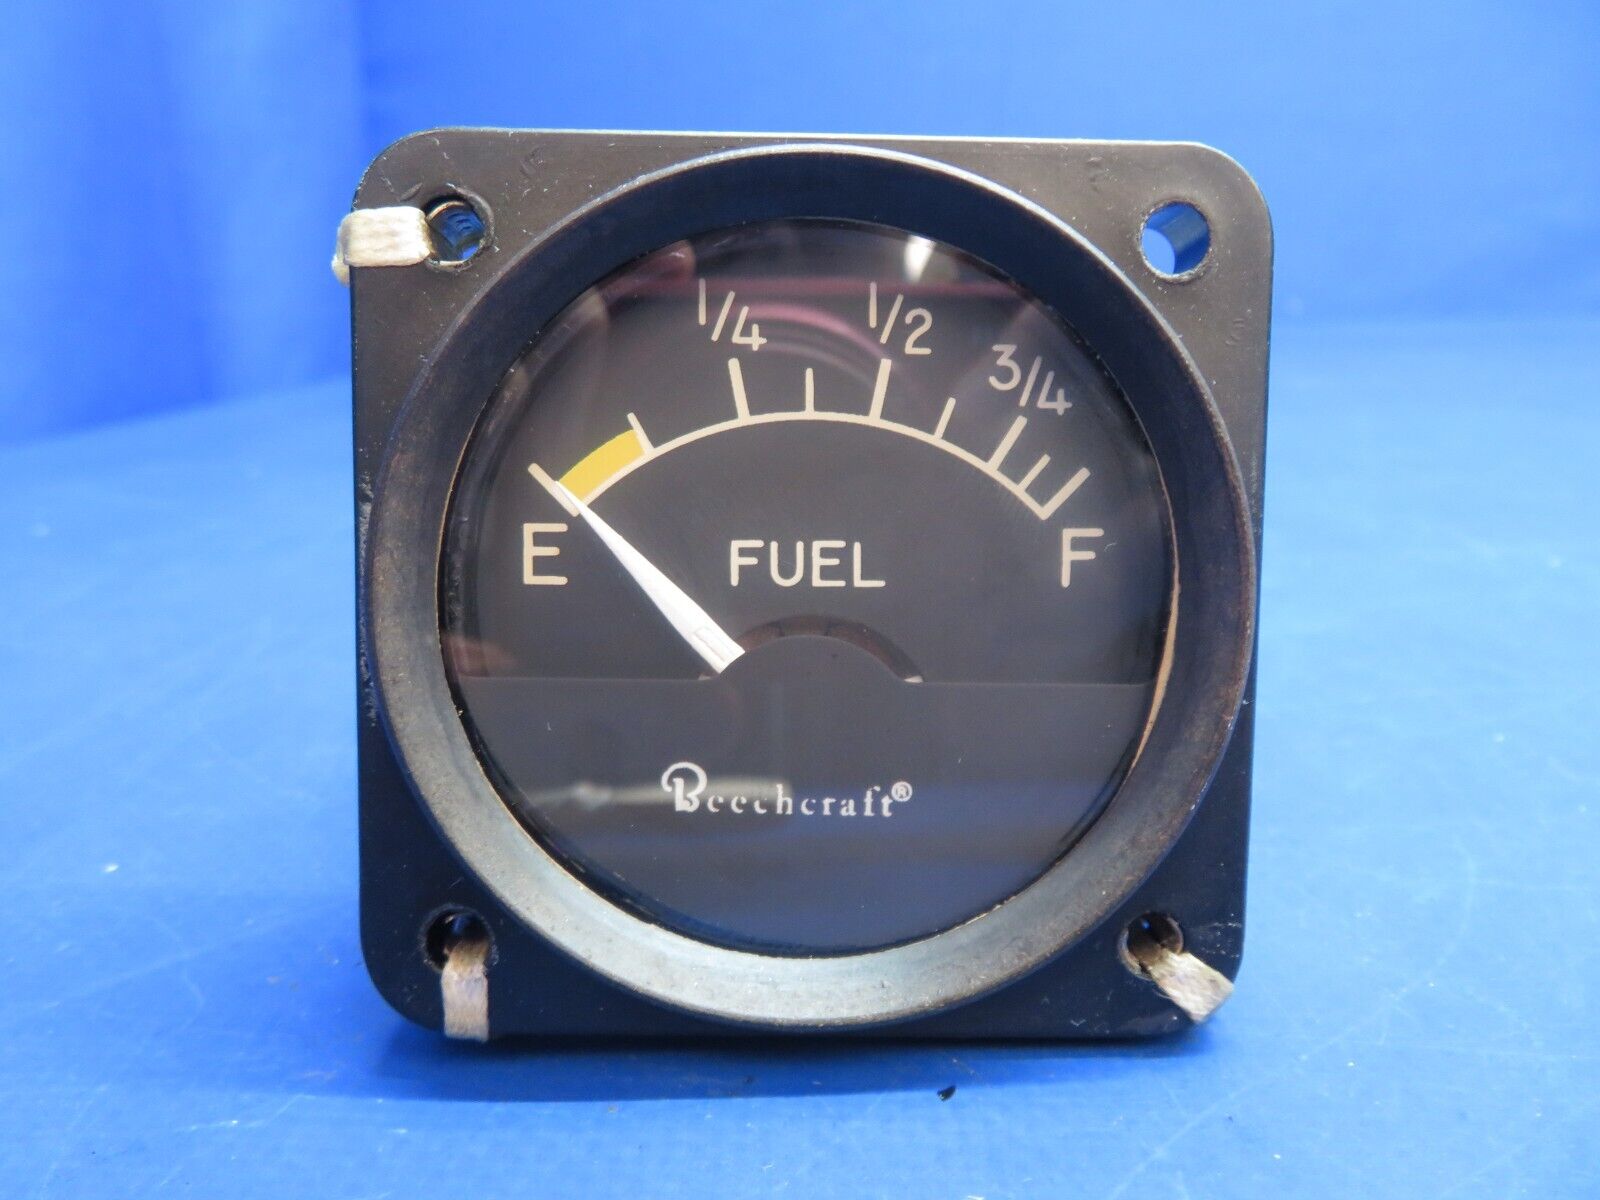 Beech 95-B55 Baron Electrical Inst. Fuel Quantity Gauge P/N A-1156-5 (0223-798)